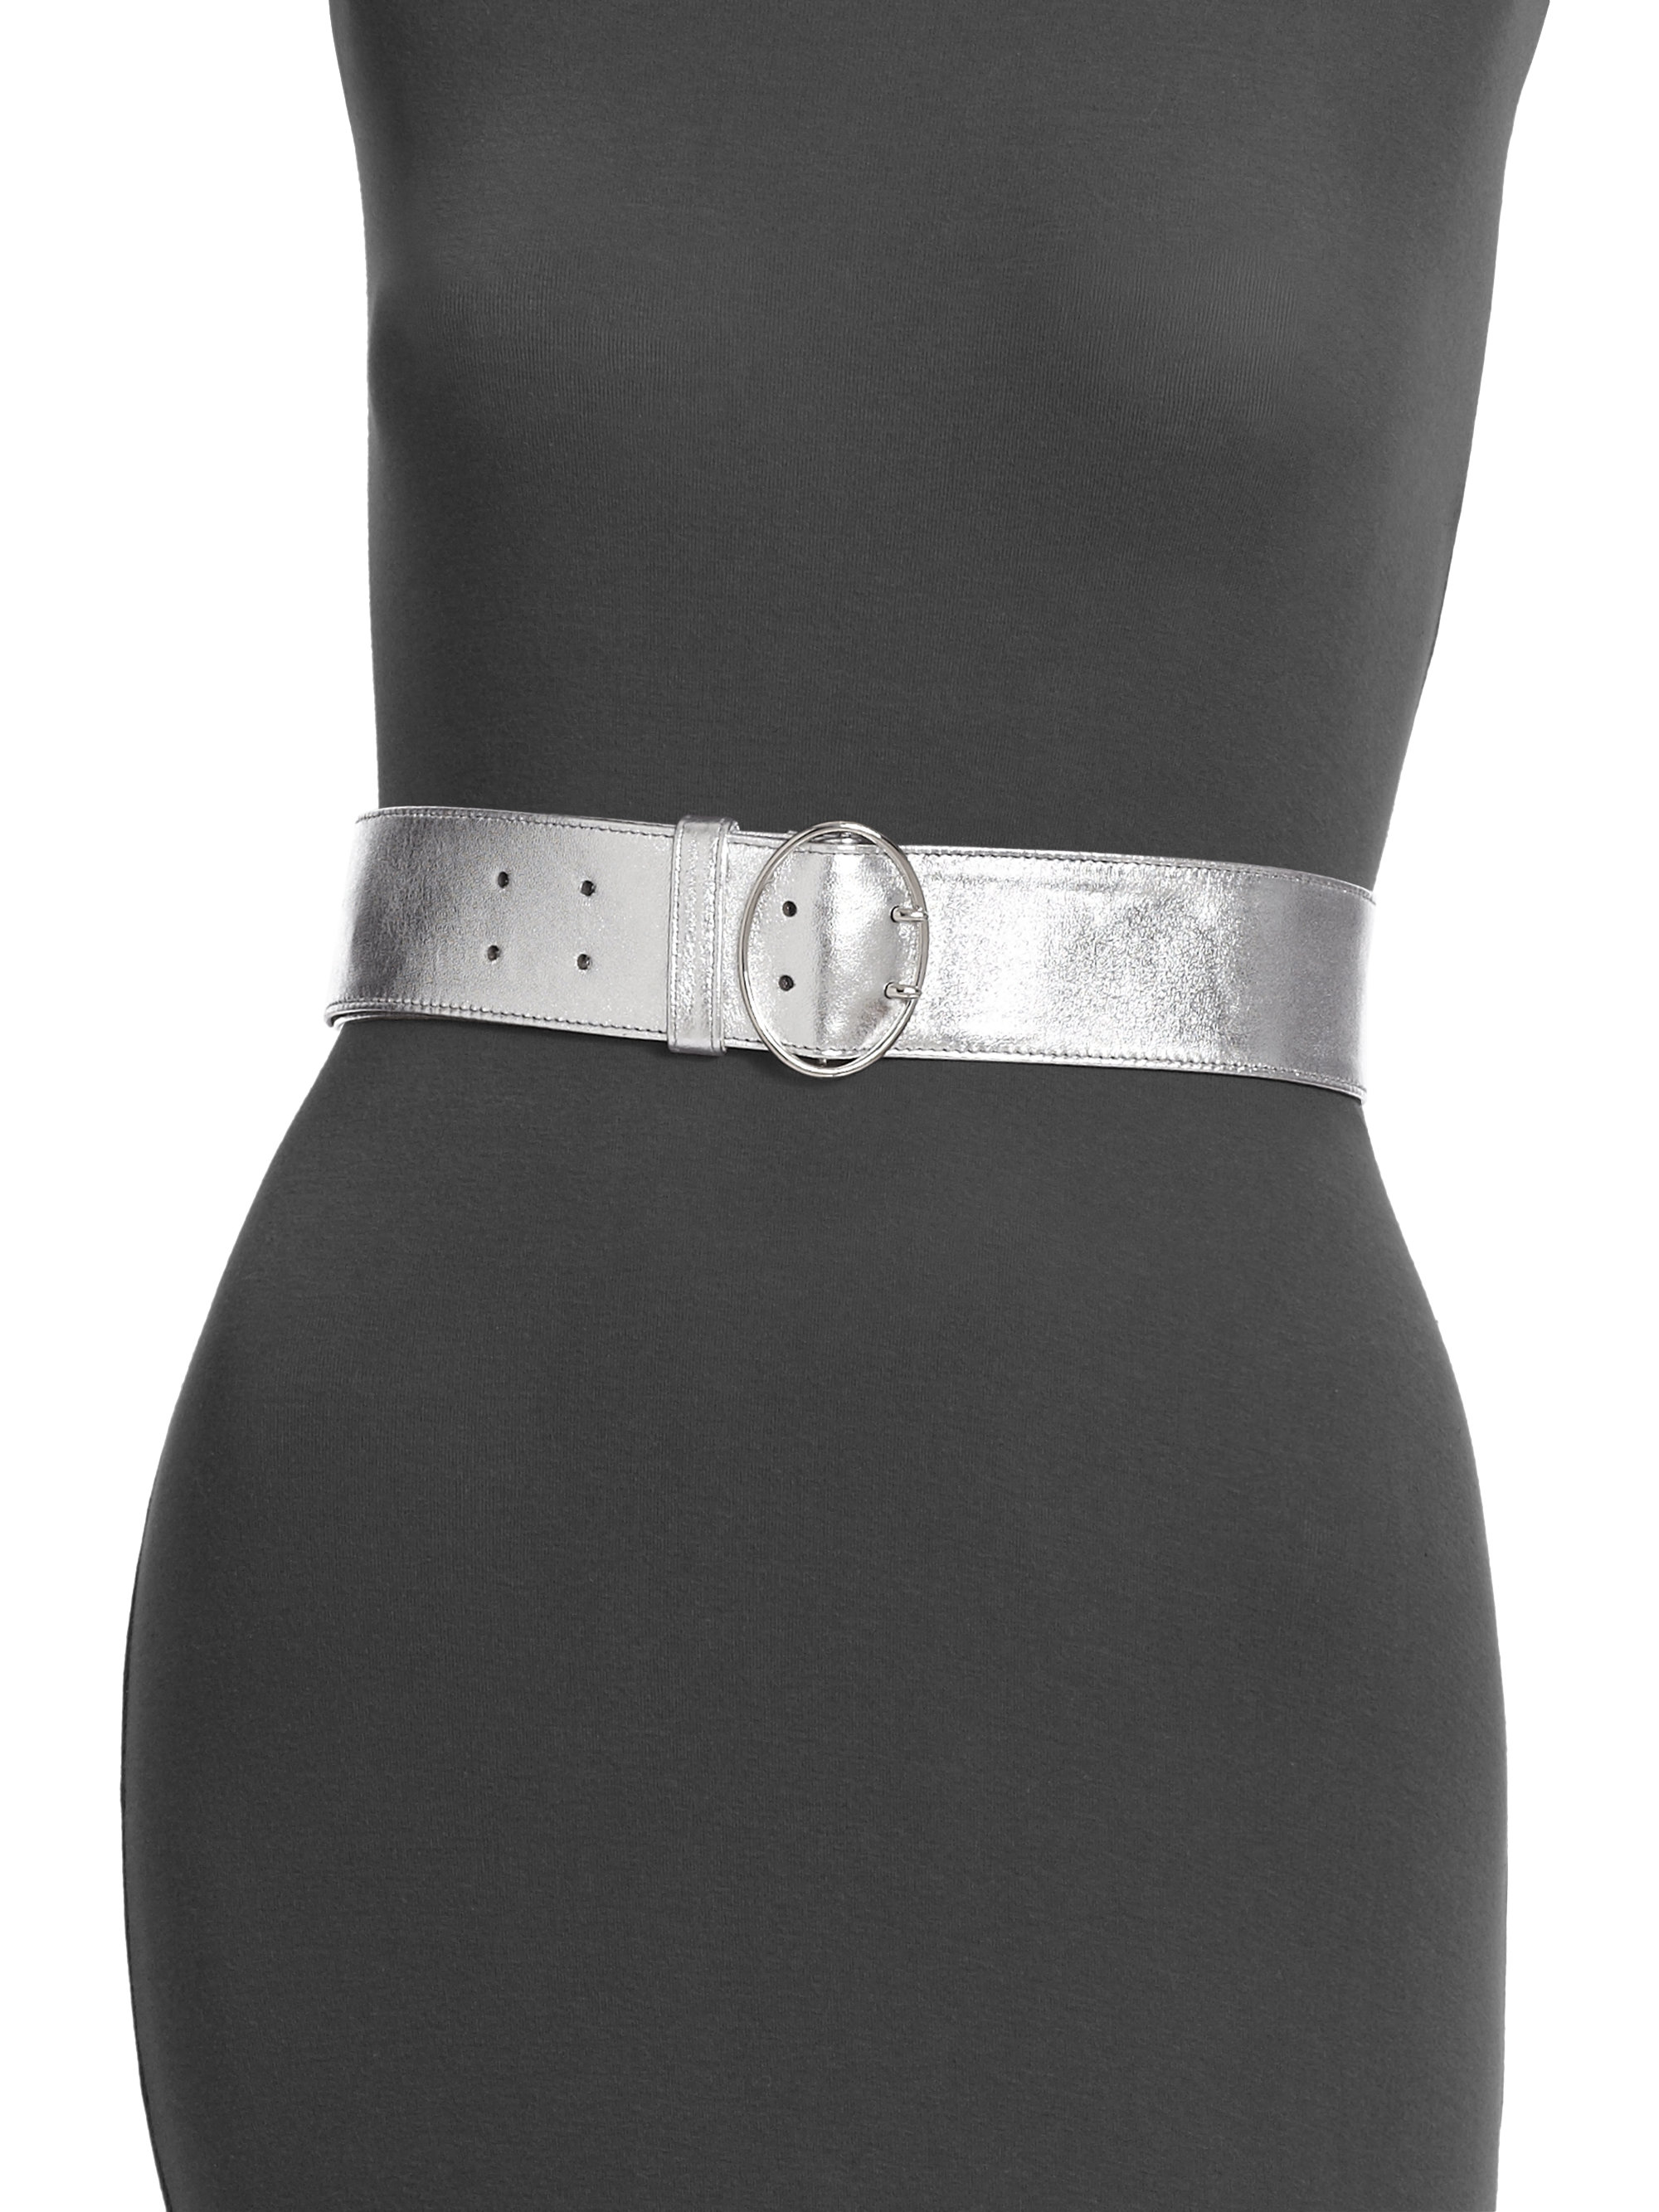 Prada Wide Metallic Nappa Leather Belt in Silver | Lyst  